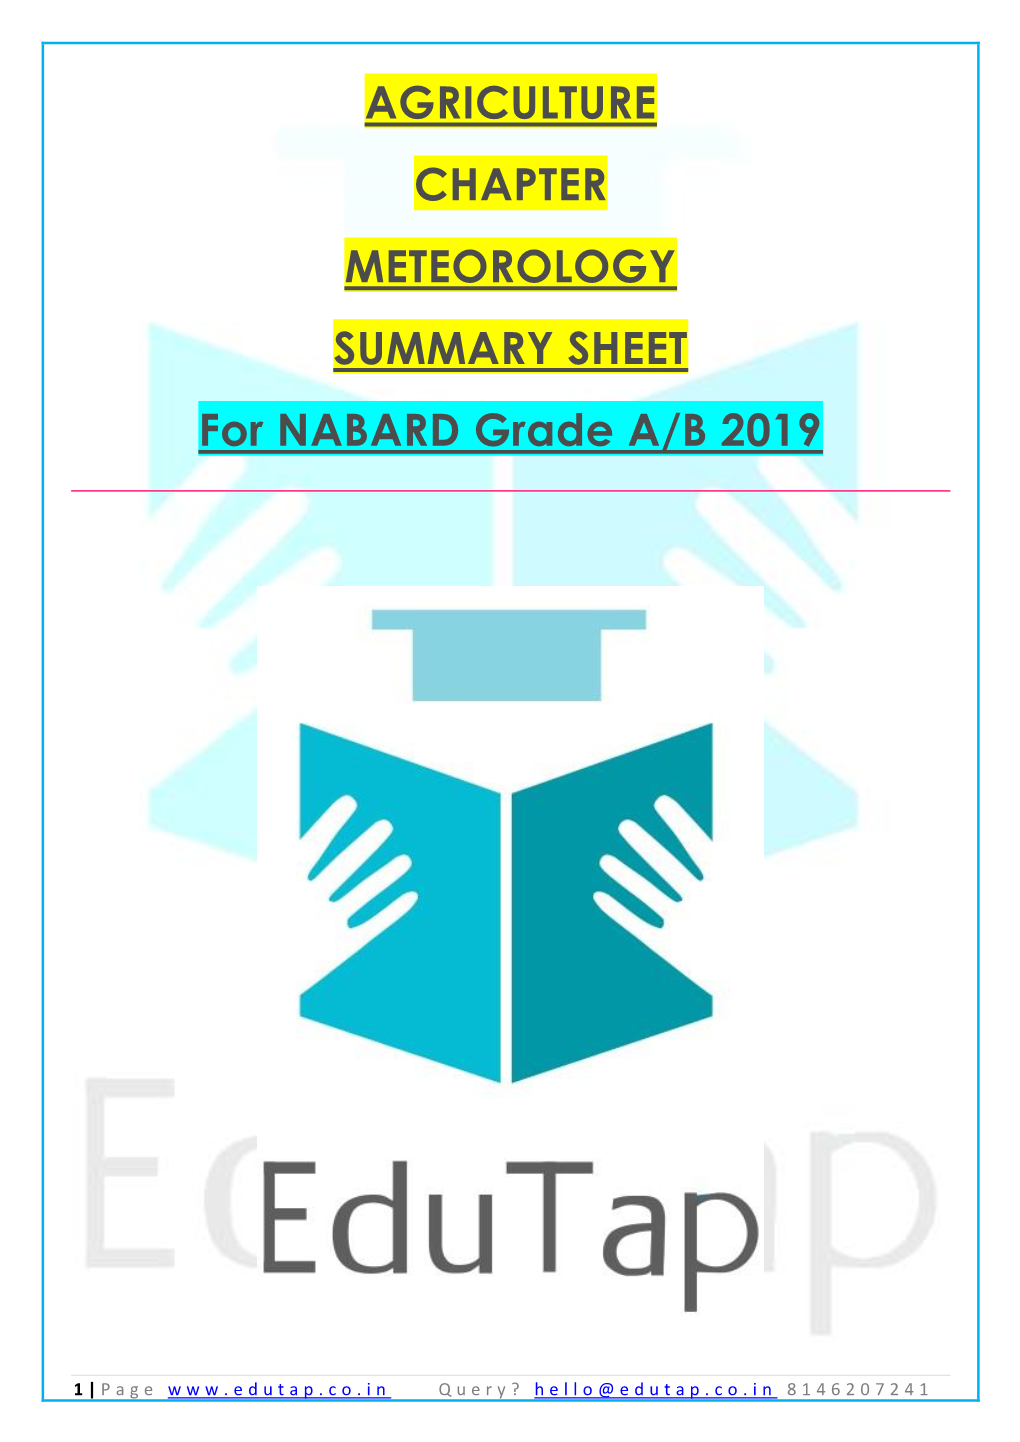 METEOROLOGY SUMMARY SHEET for NABARD Grade A/B 2019